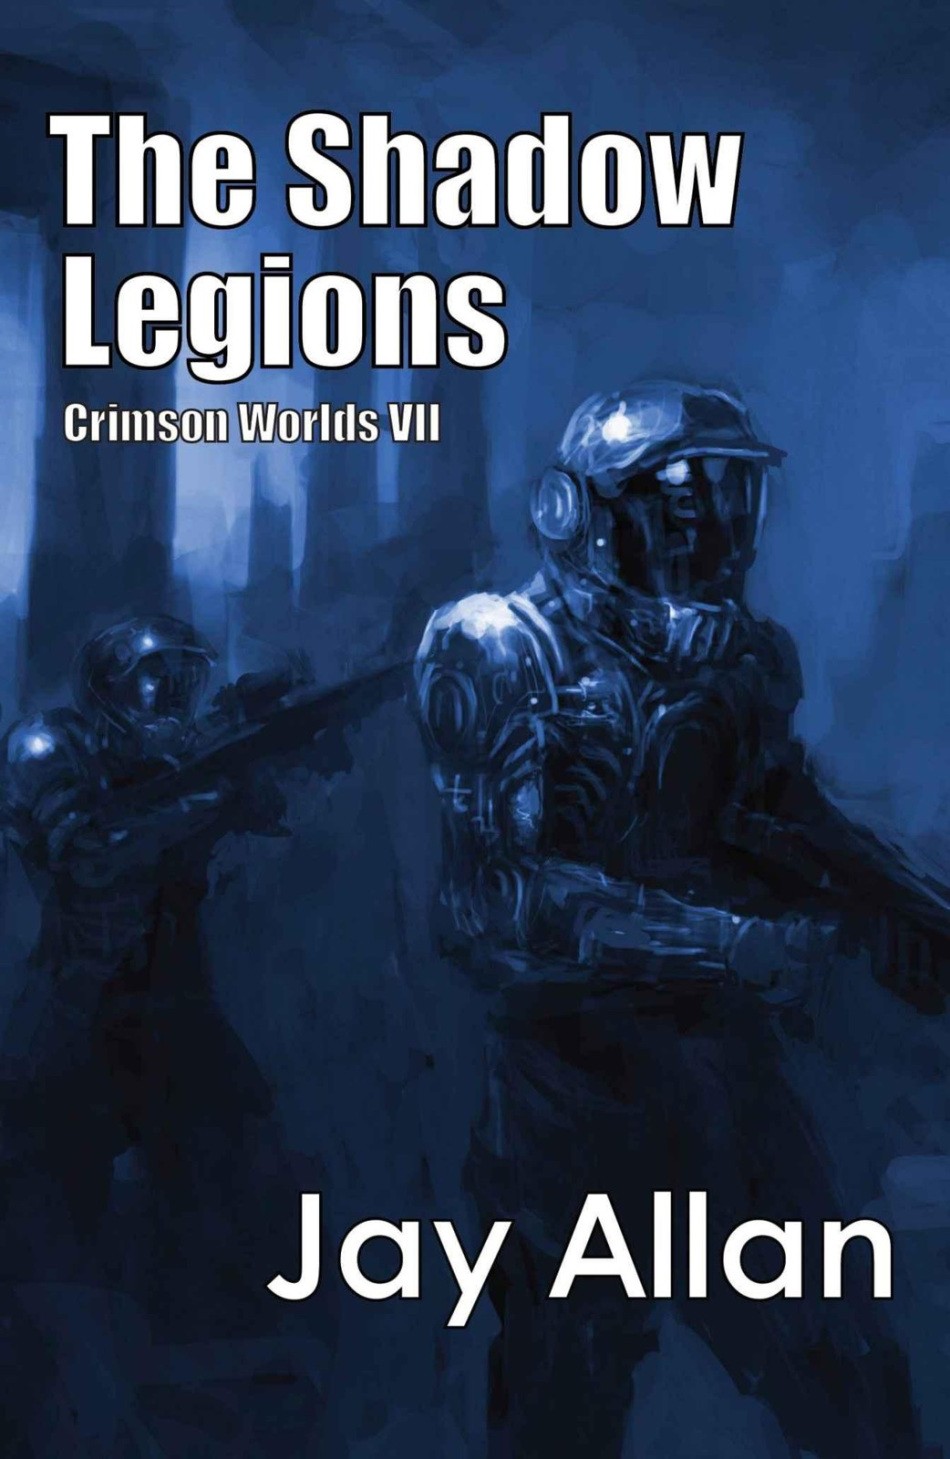 The Shadow Legions